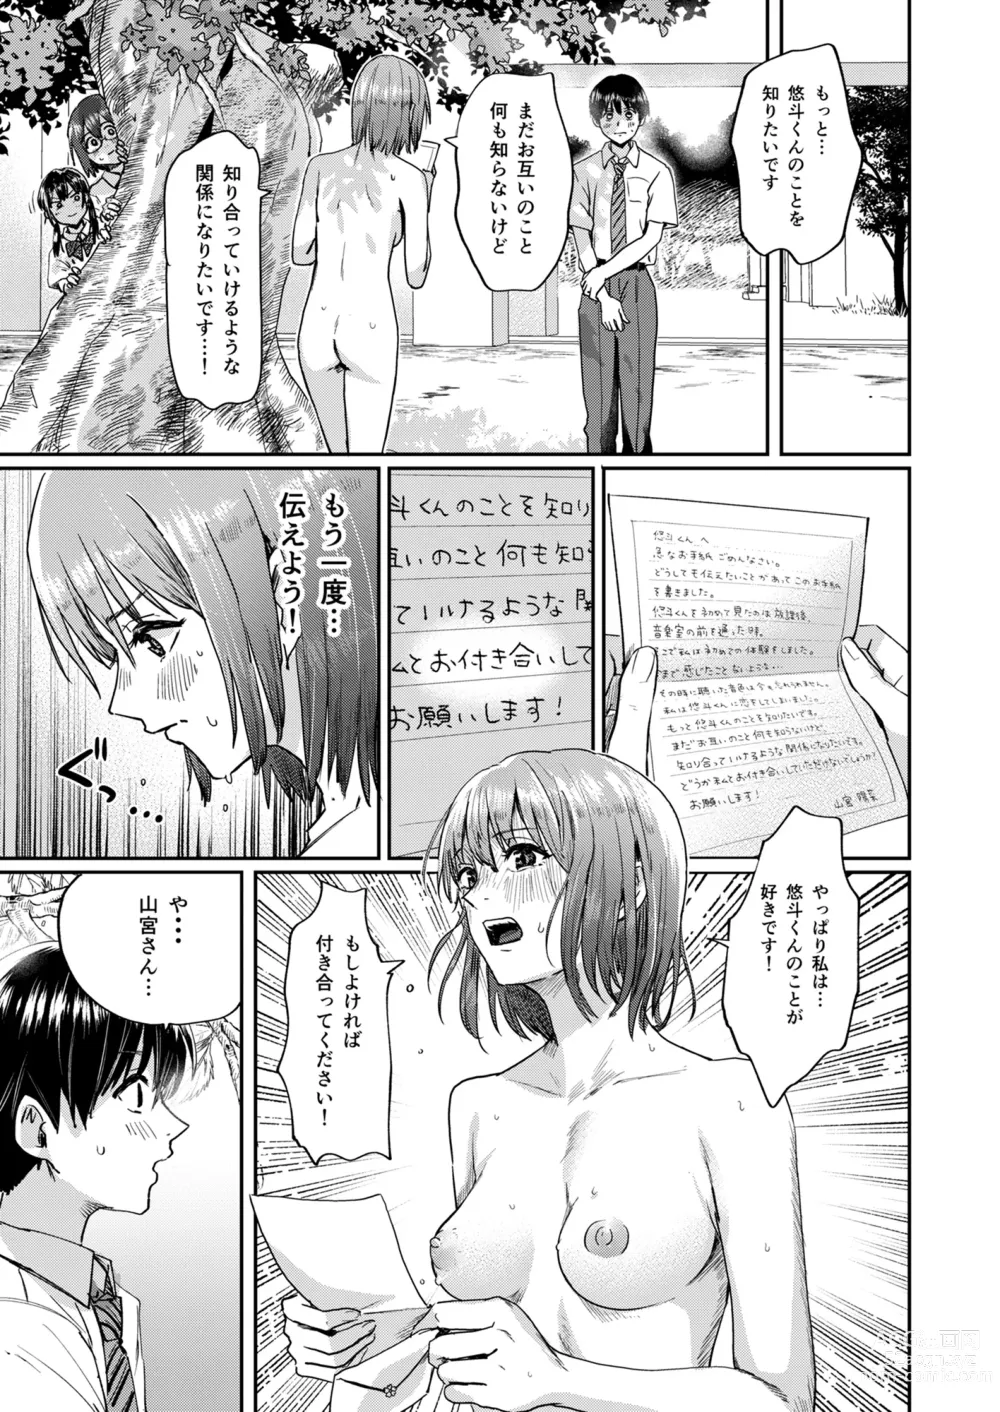 Page 18 of doujinshi Zenra Kokuhaku.